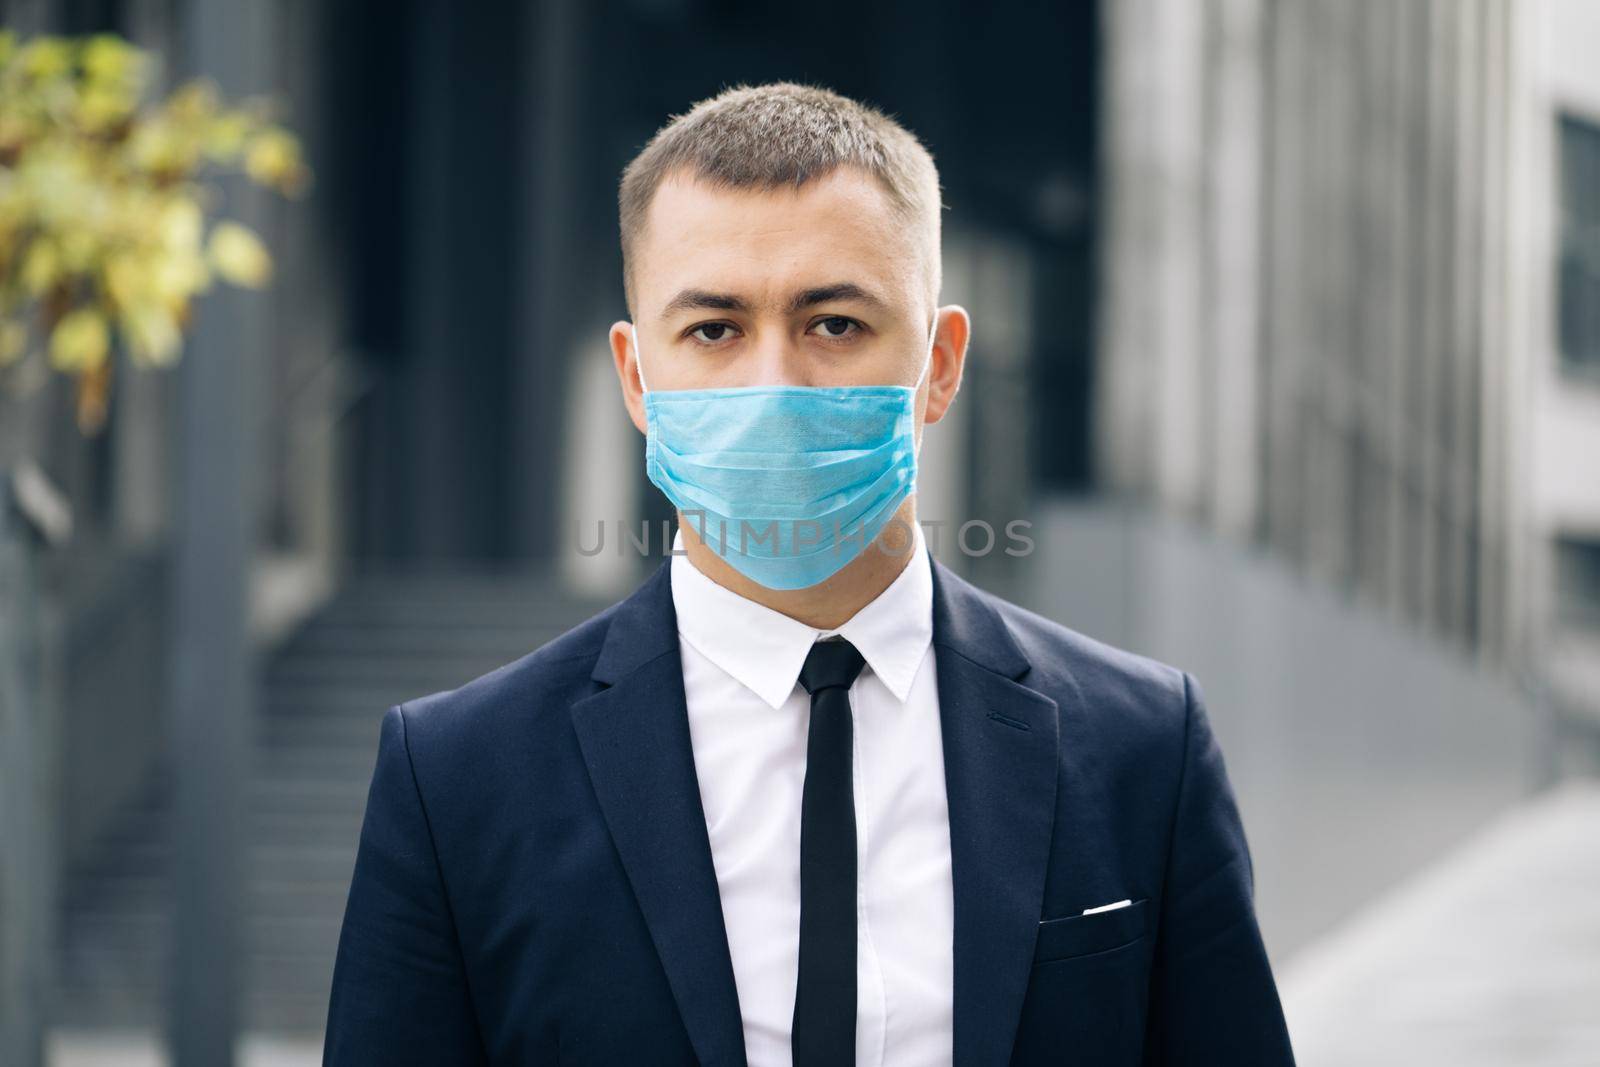 Portrait Business Man in Protective Face Mask Look at Camera COVID-19 Coronavirus Infection. Face mask Covid-19. Epidemic Coronavirus Mers. Pandemic Flu Corona Virus. Human Masked 2019-ncov.